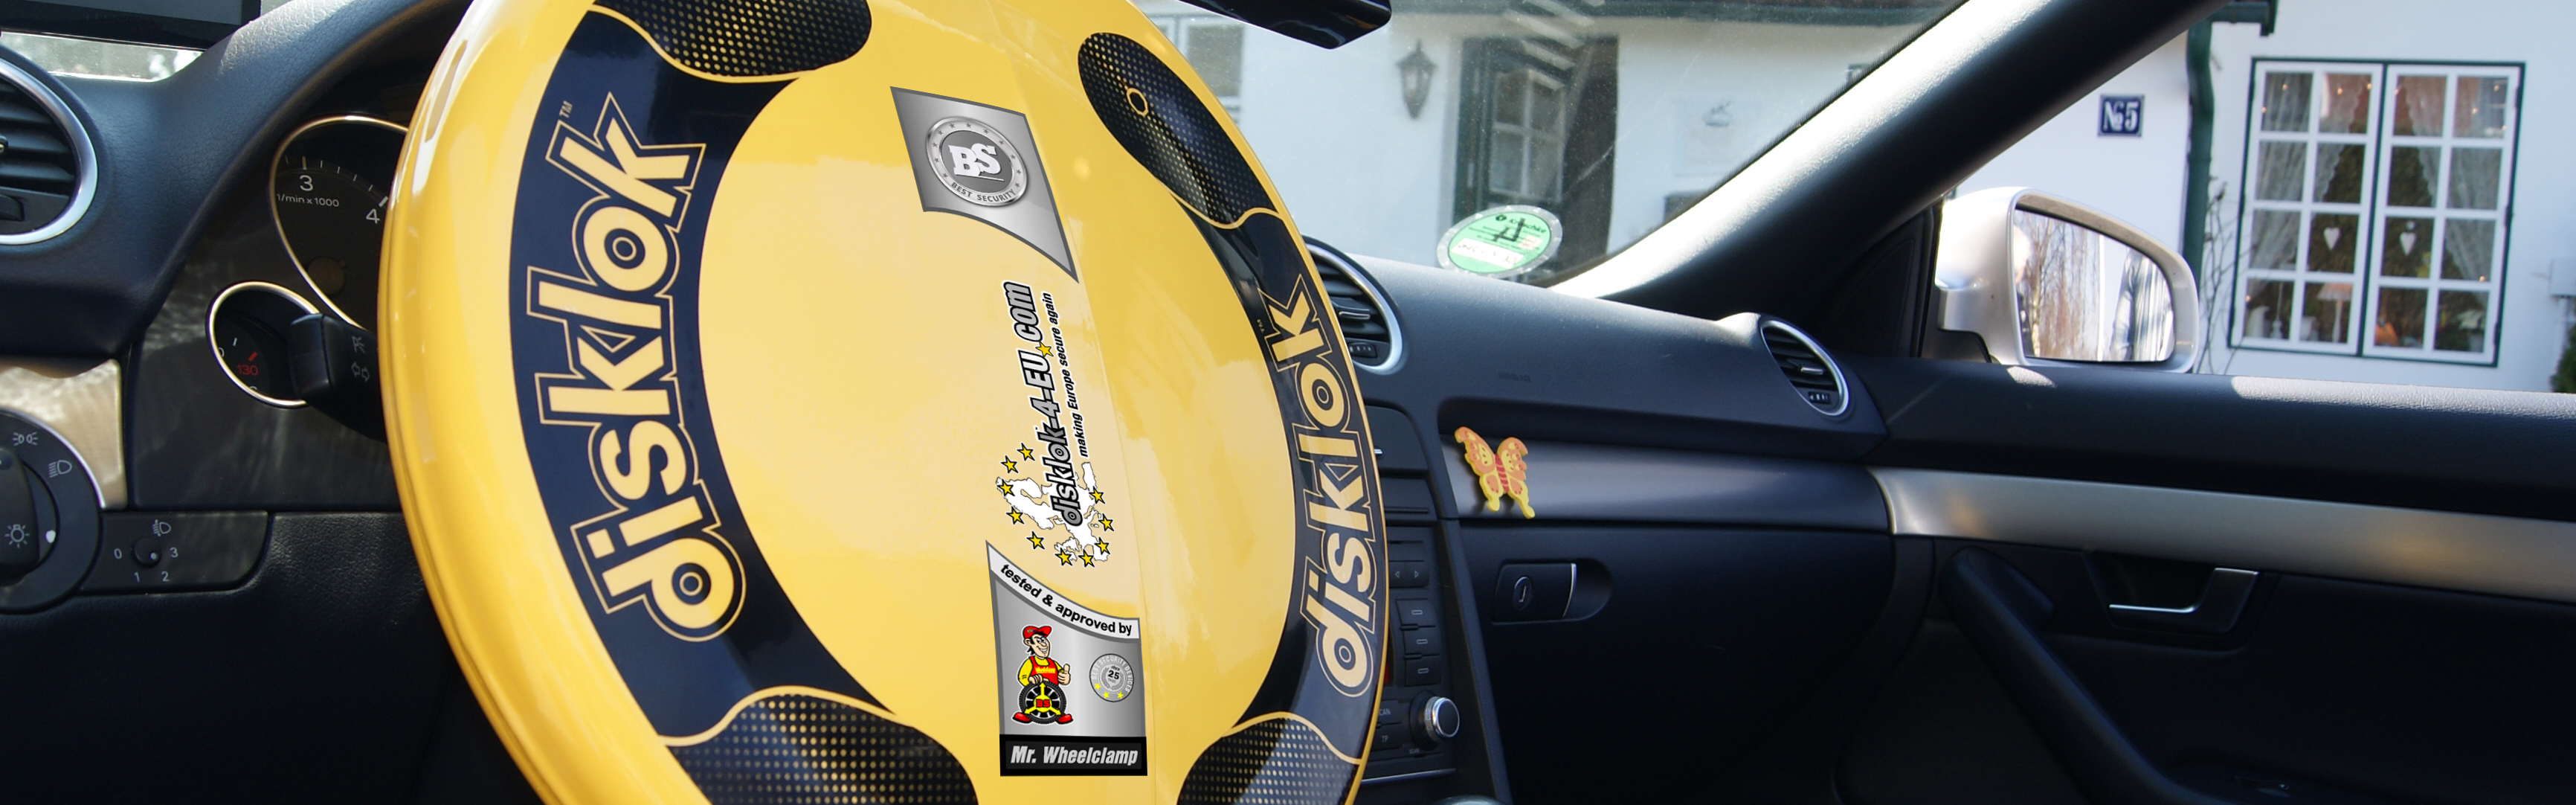 Effektive Lenkradkrallen schützen Lenkrad und Airbag